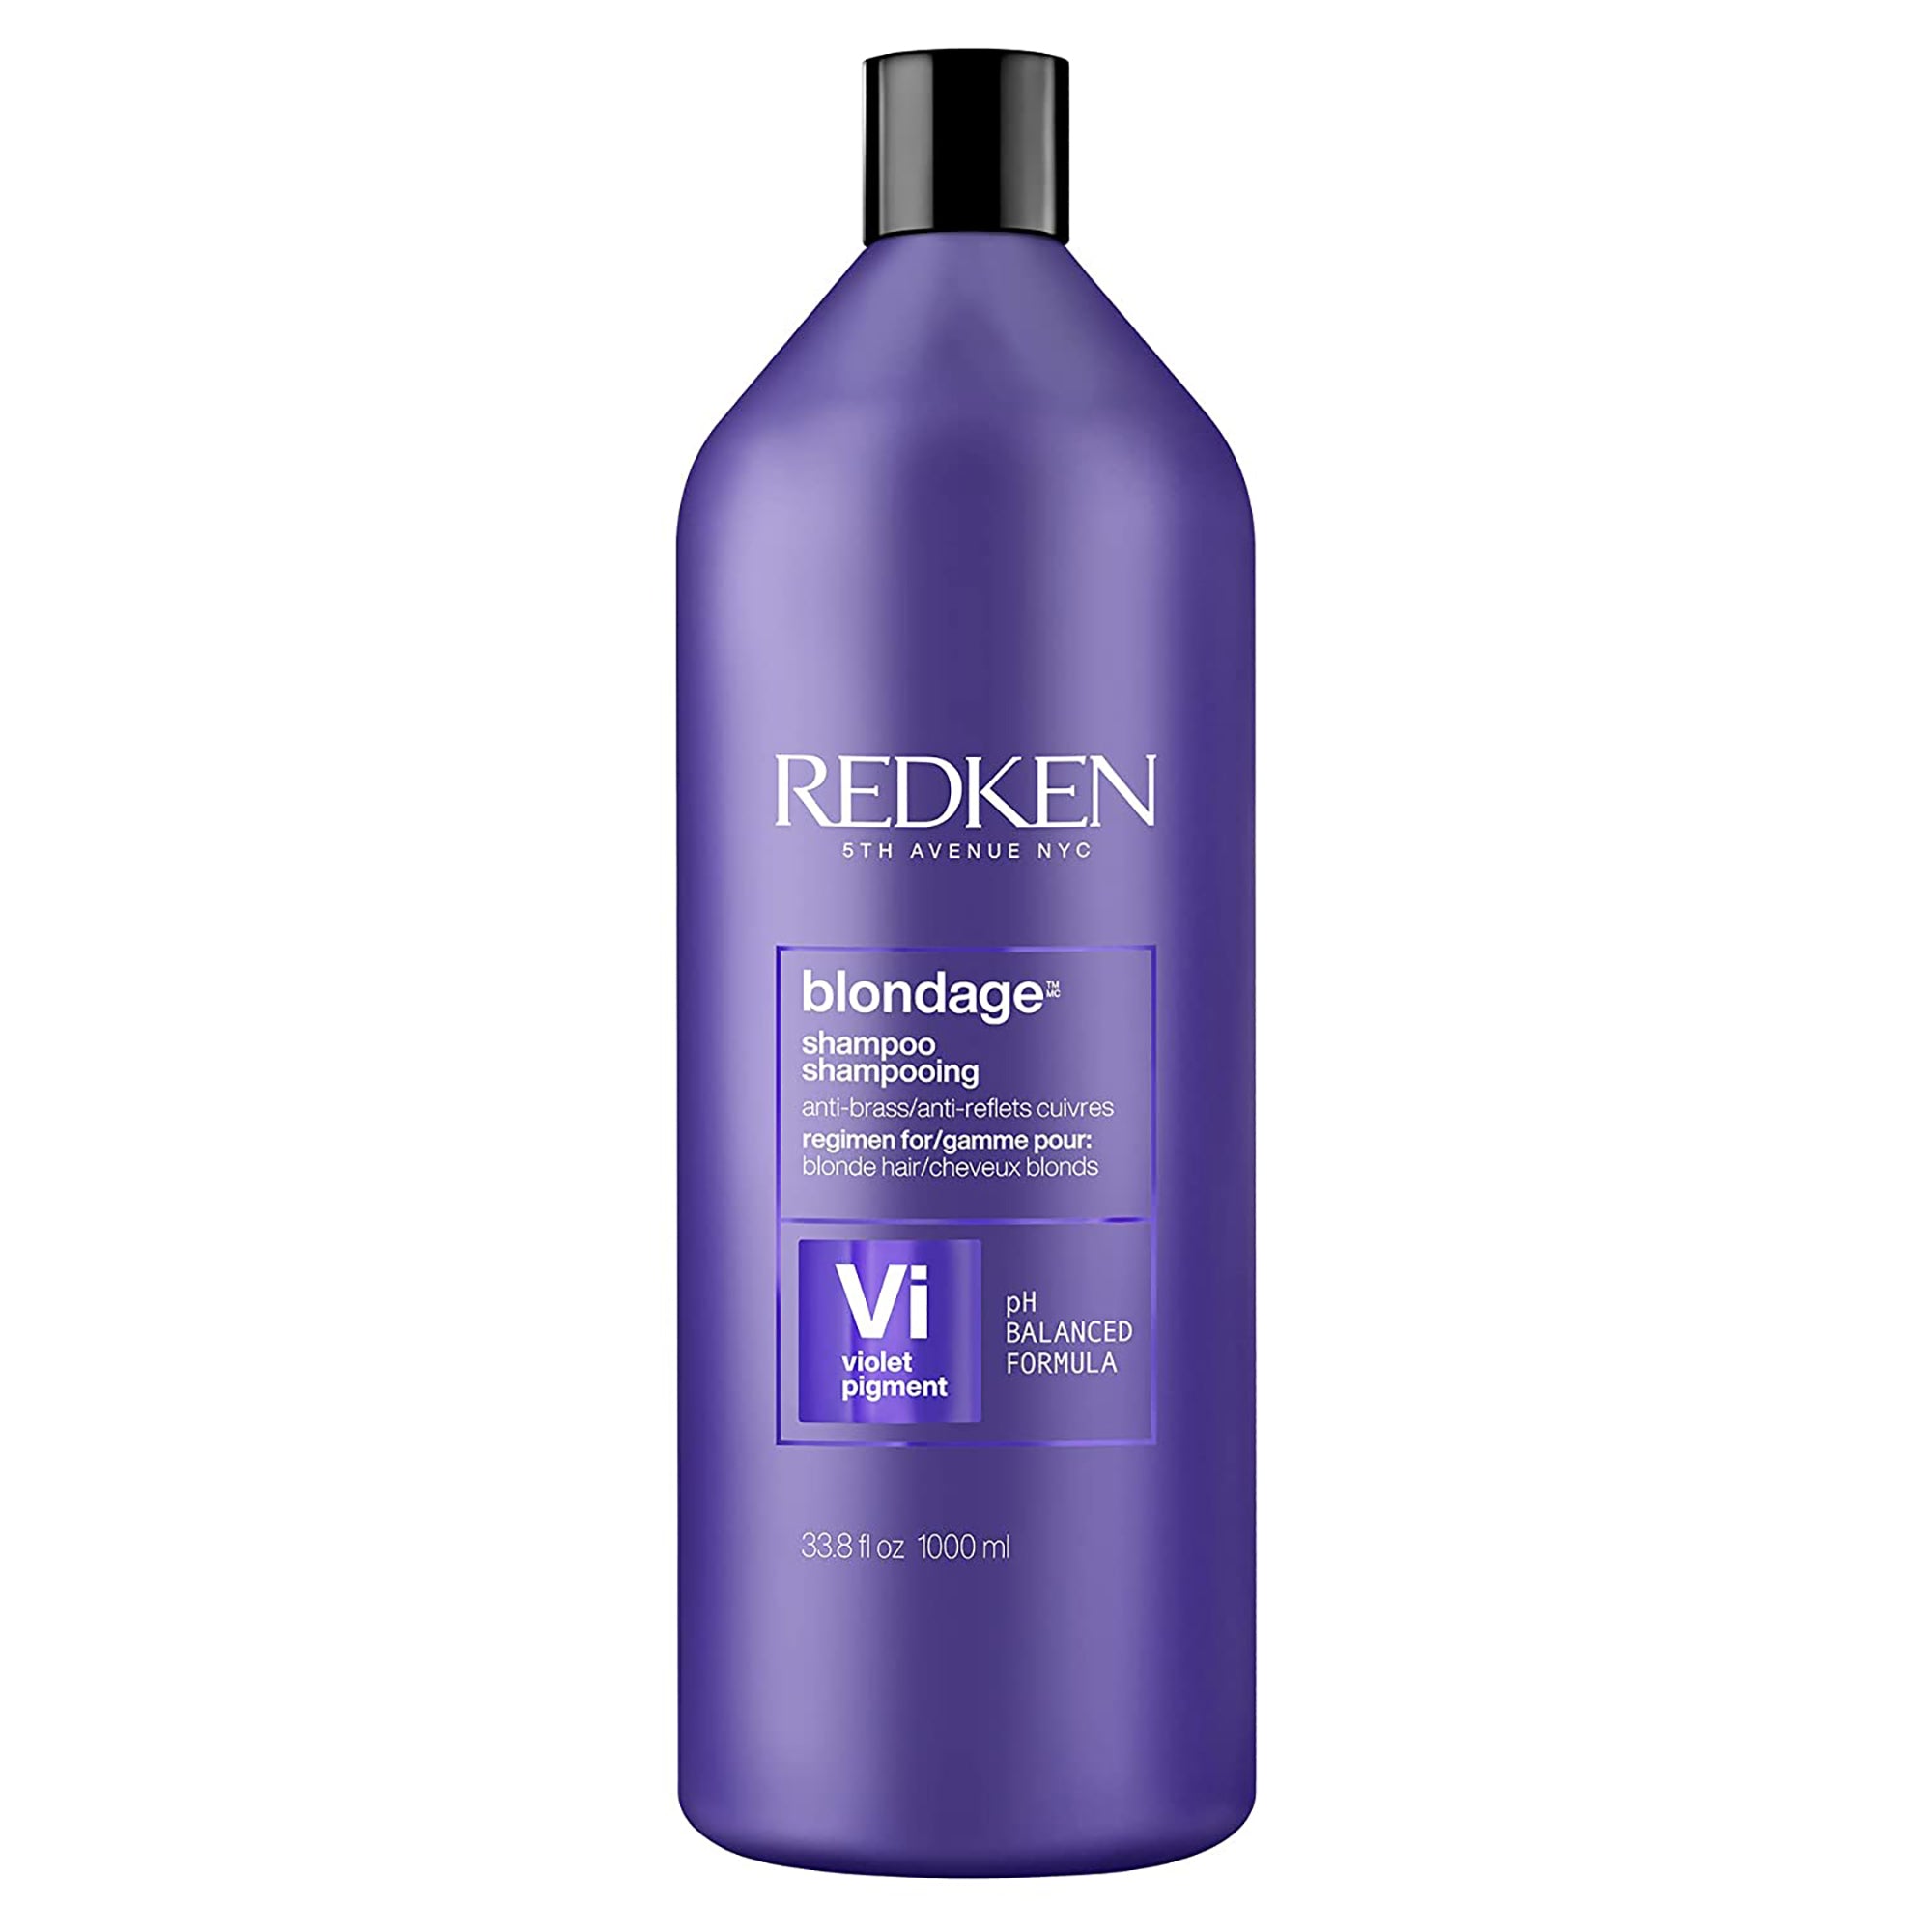 Redken Blondage Shampoo and Conditioner Liter ($104 Value)